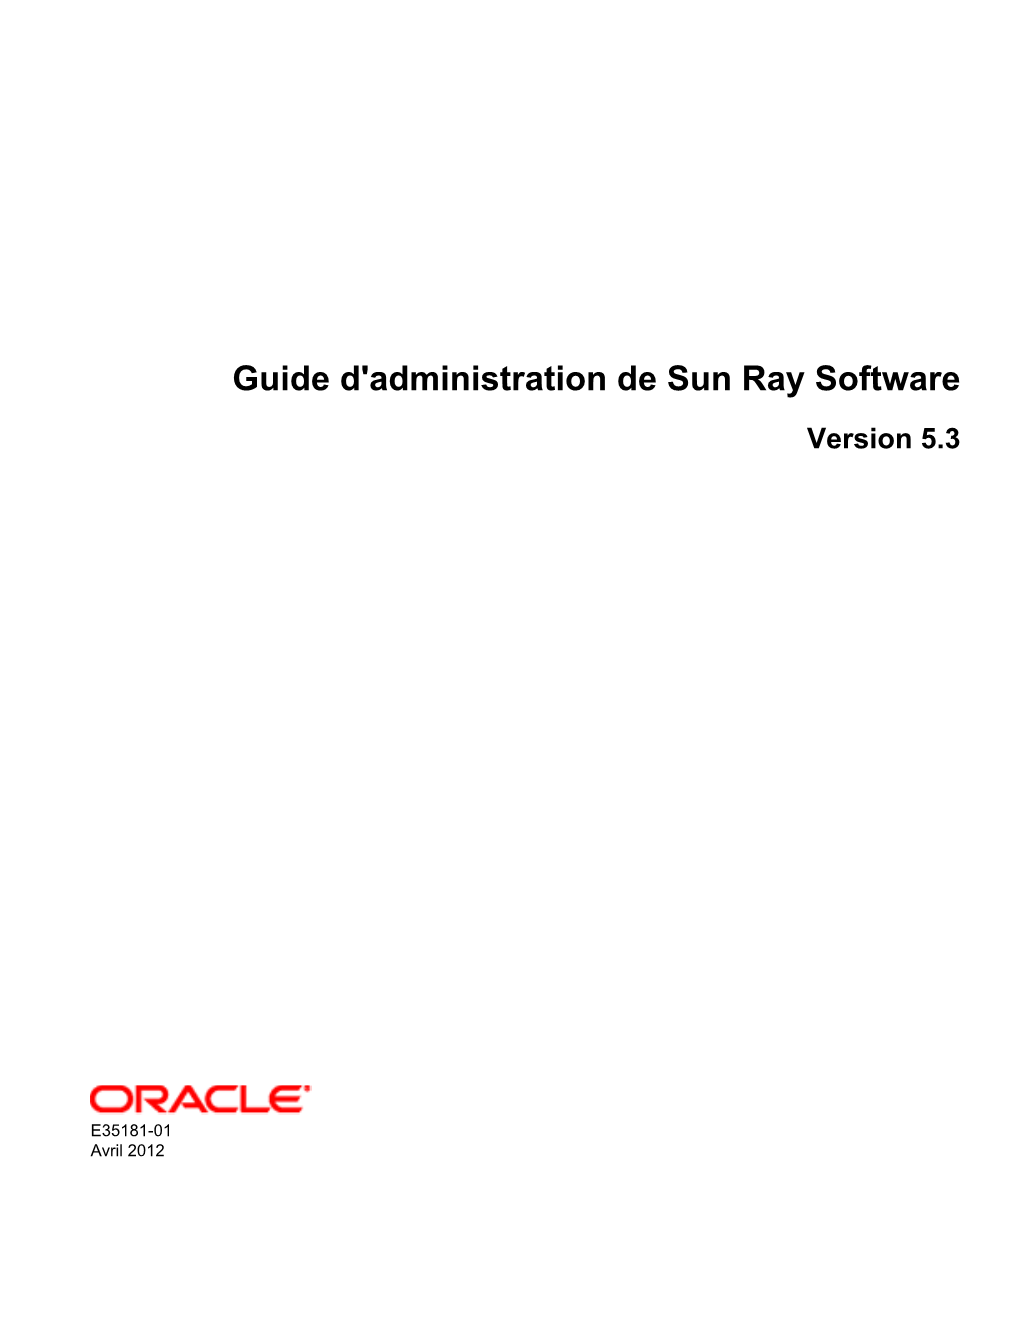 Guide D'administration De Sun Ray Software Version 5.3